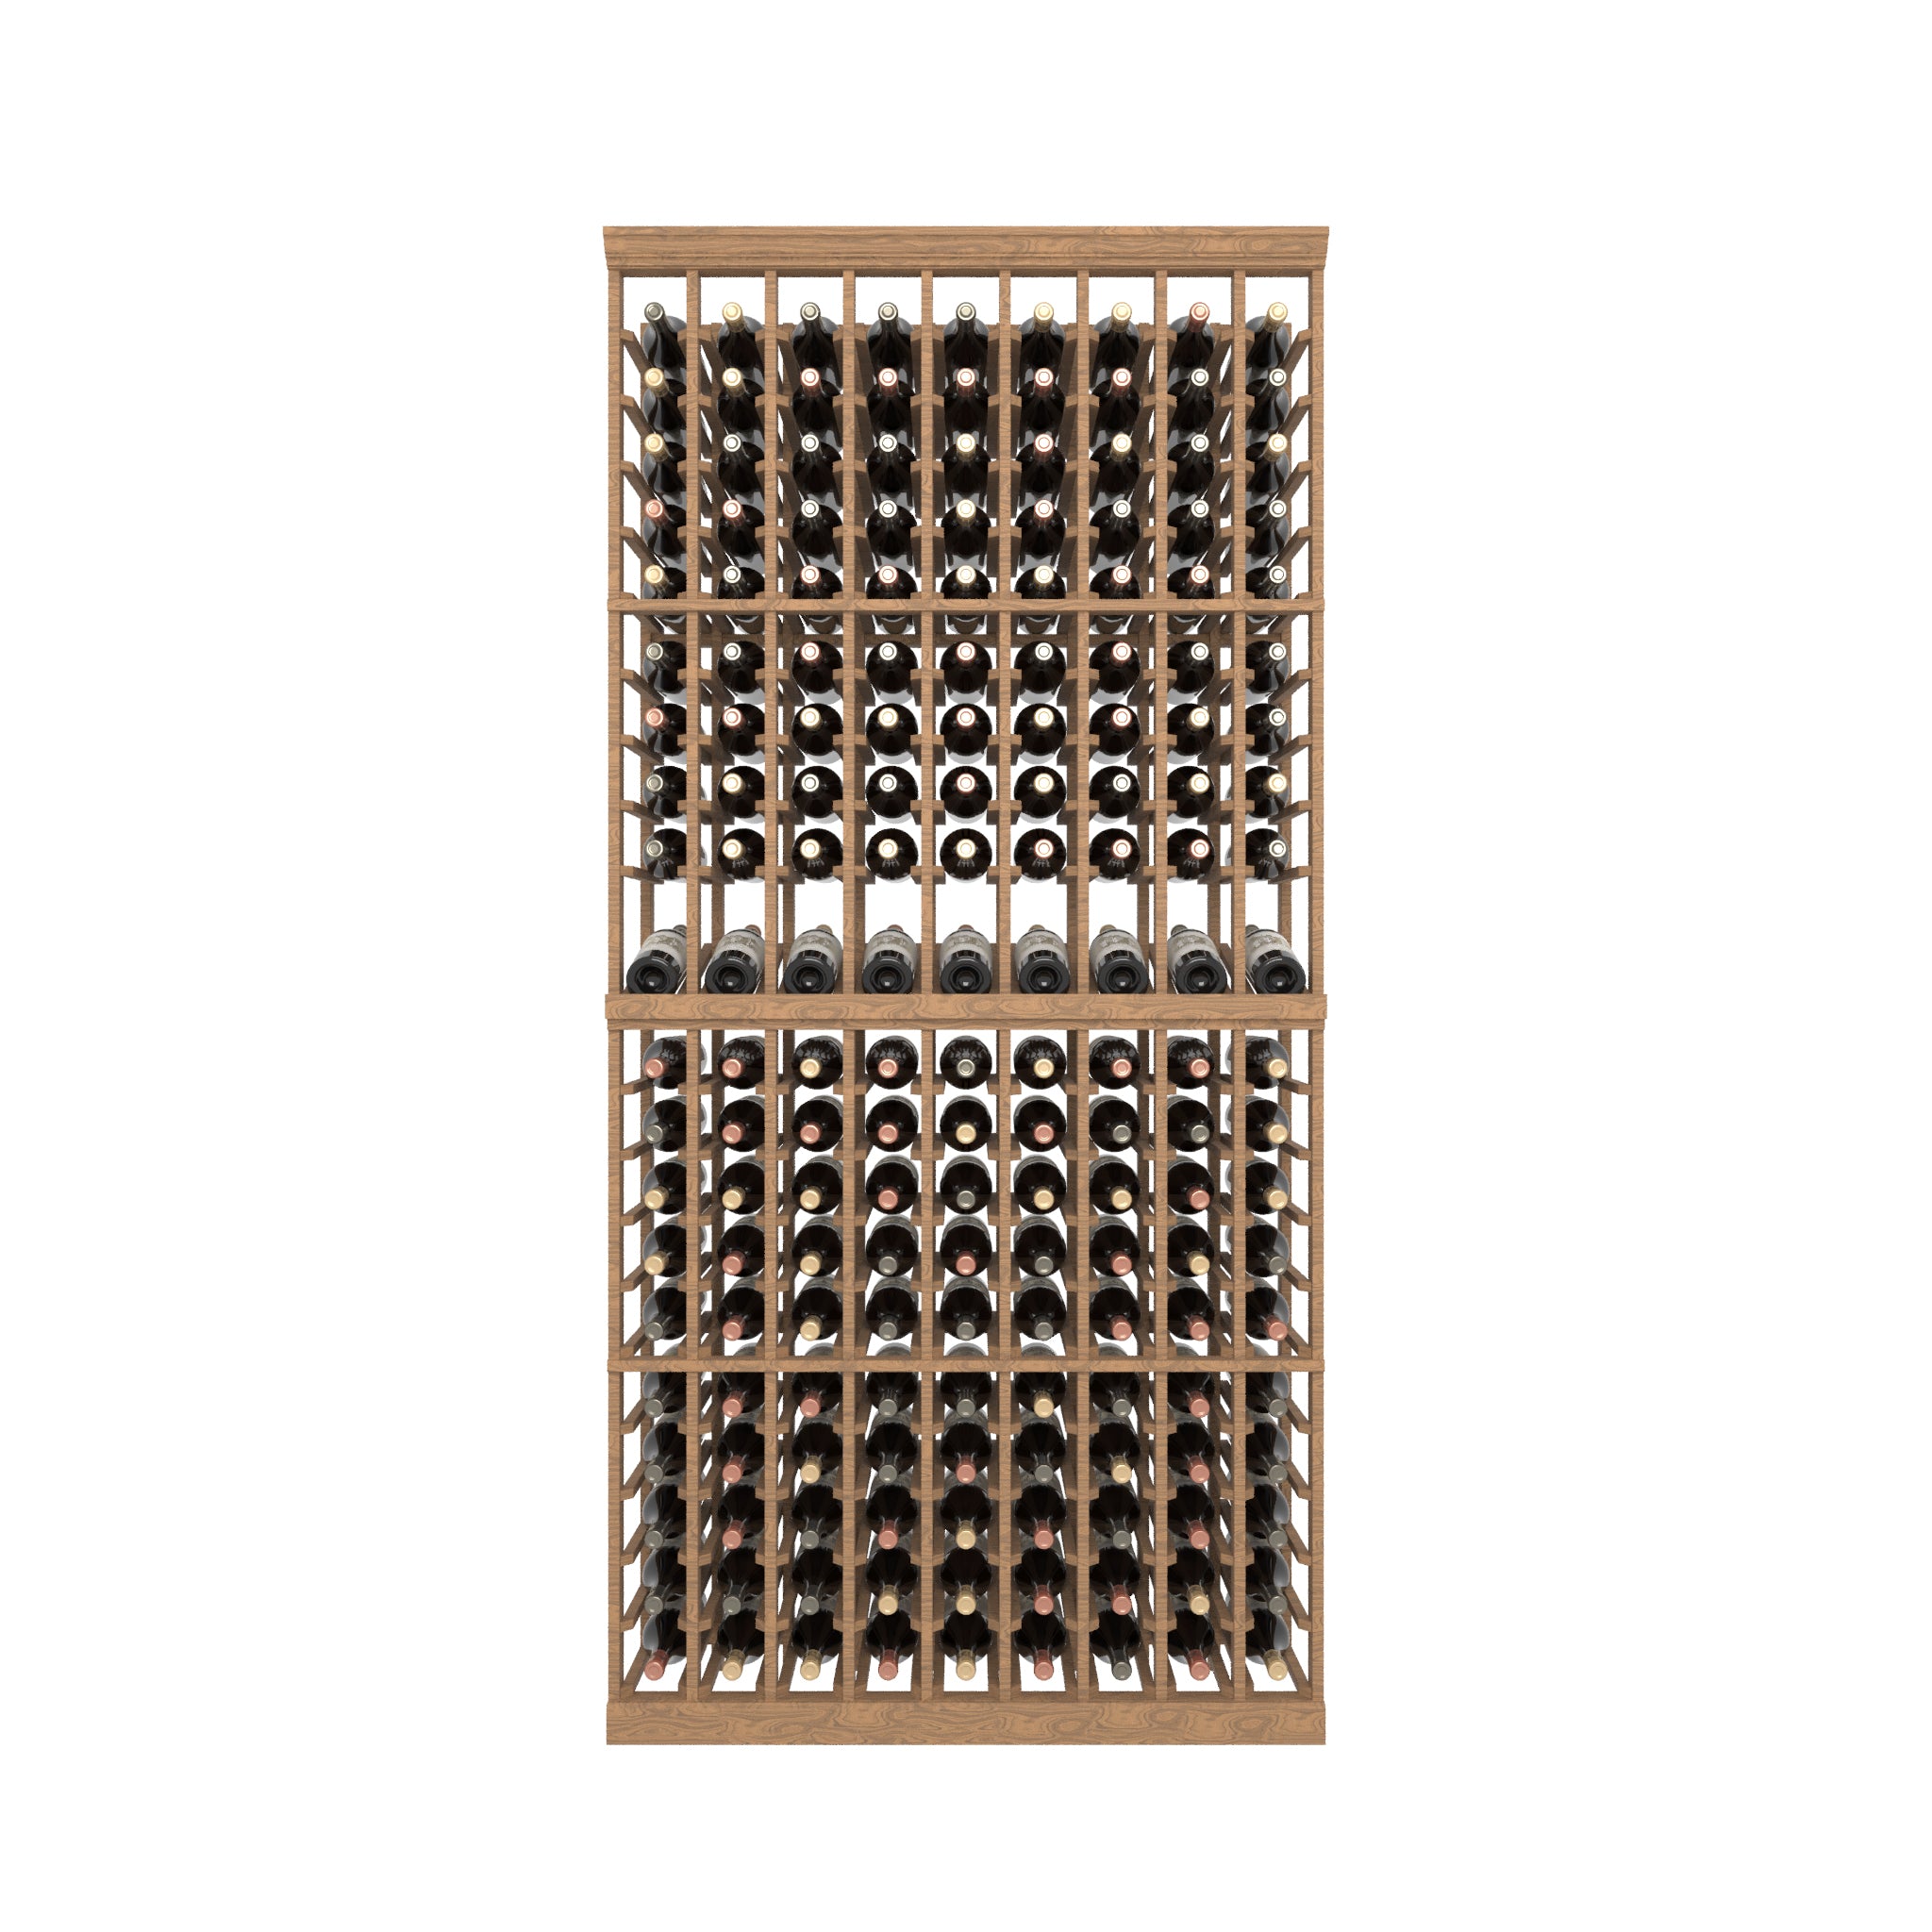 09 Column Rack with Display Row - 750ml Bottles